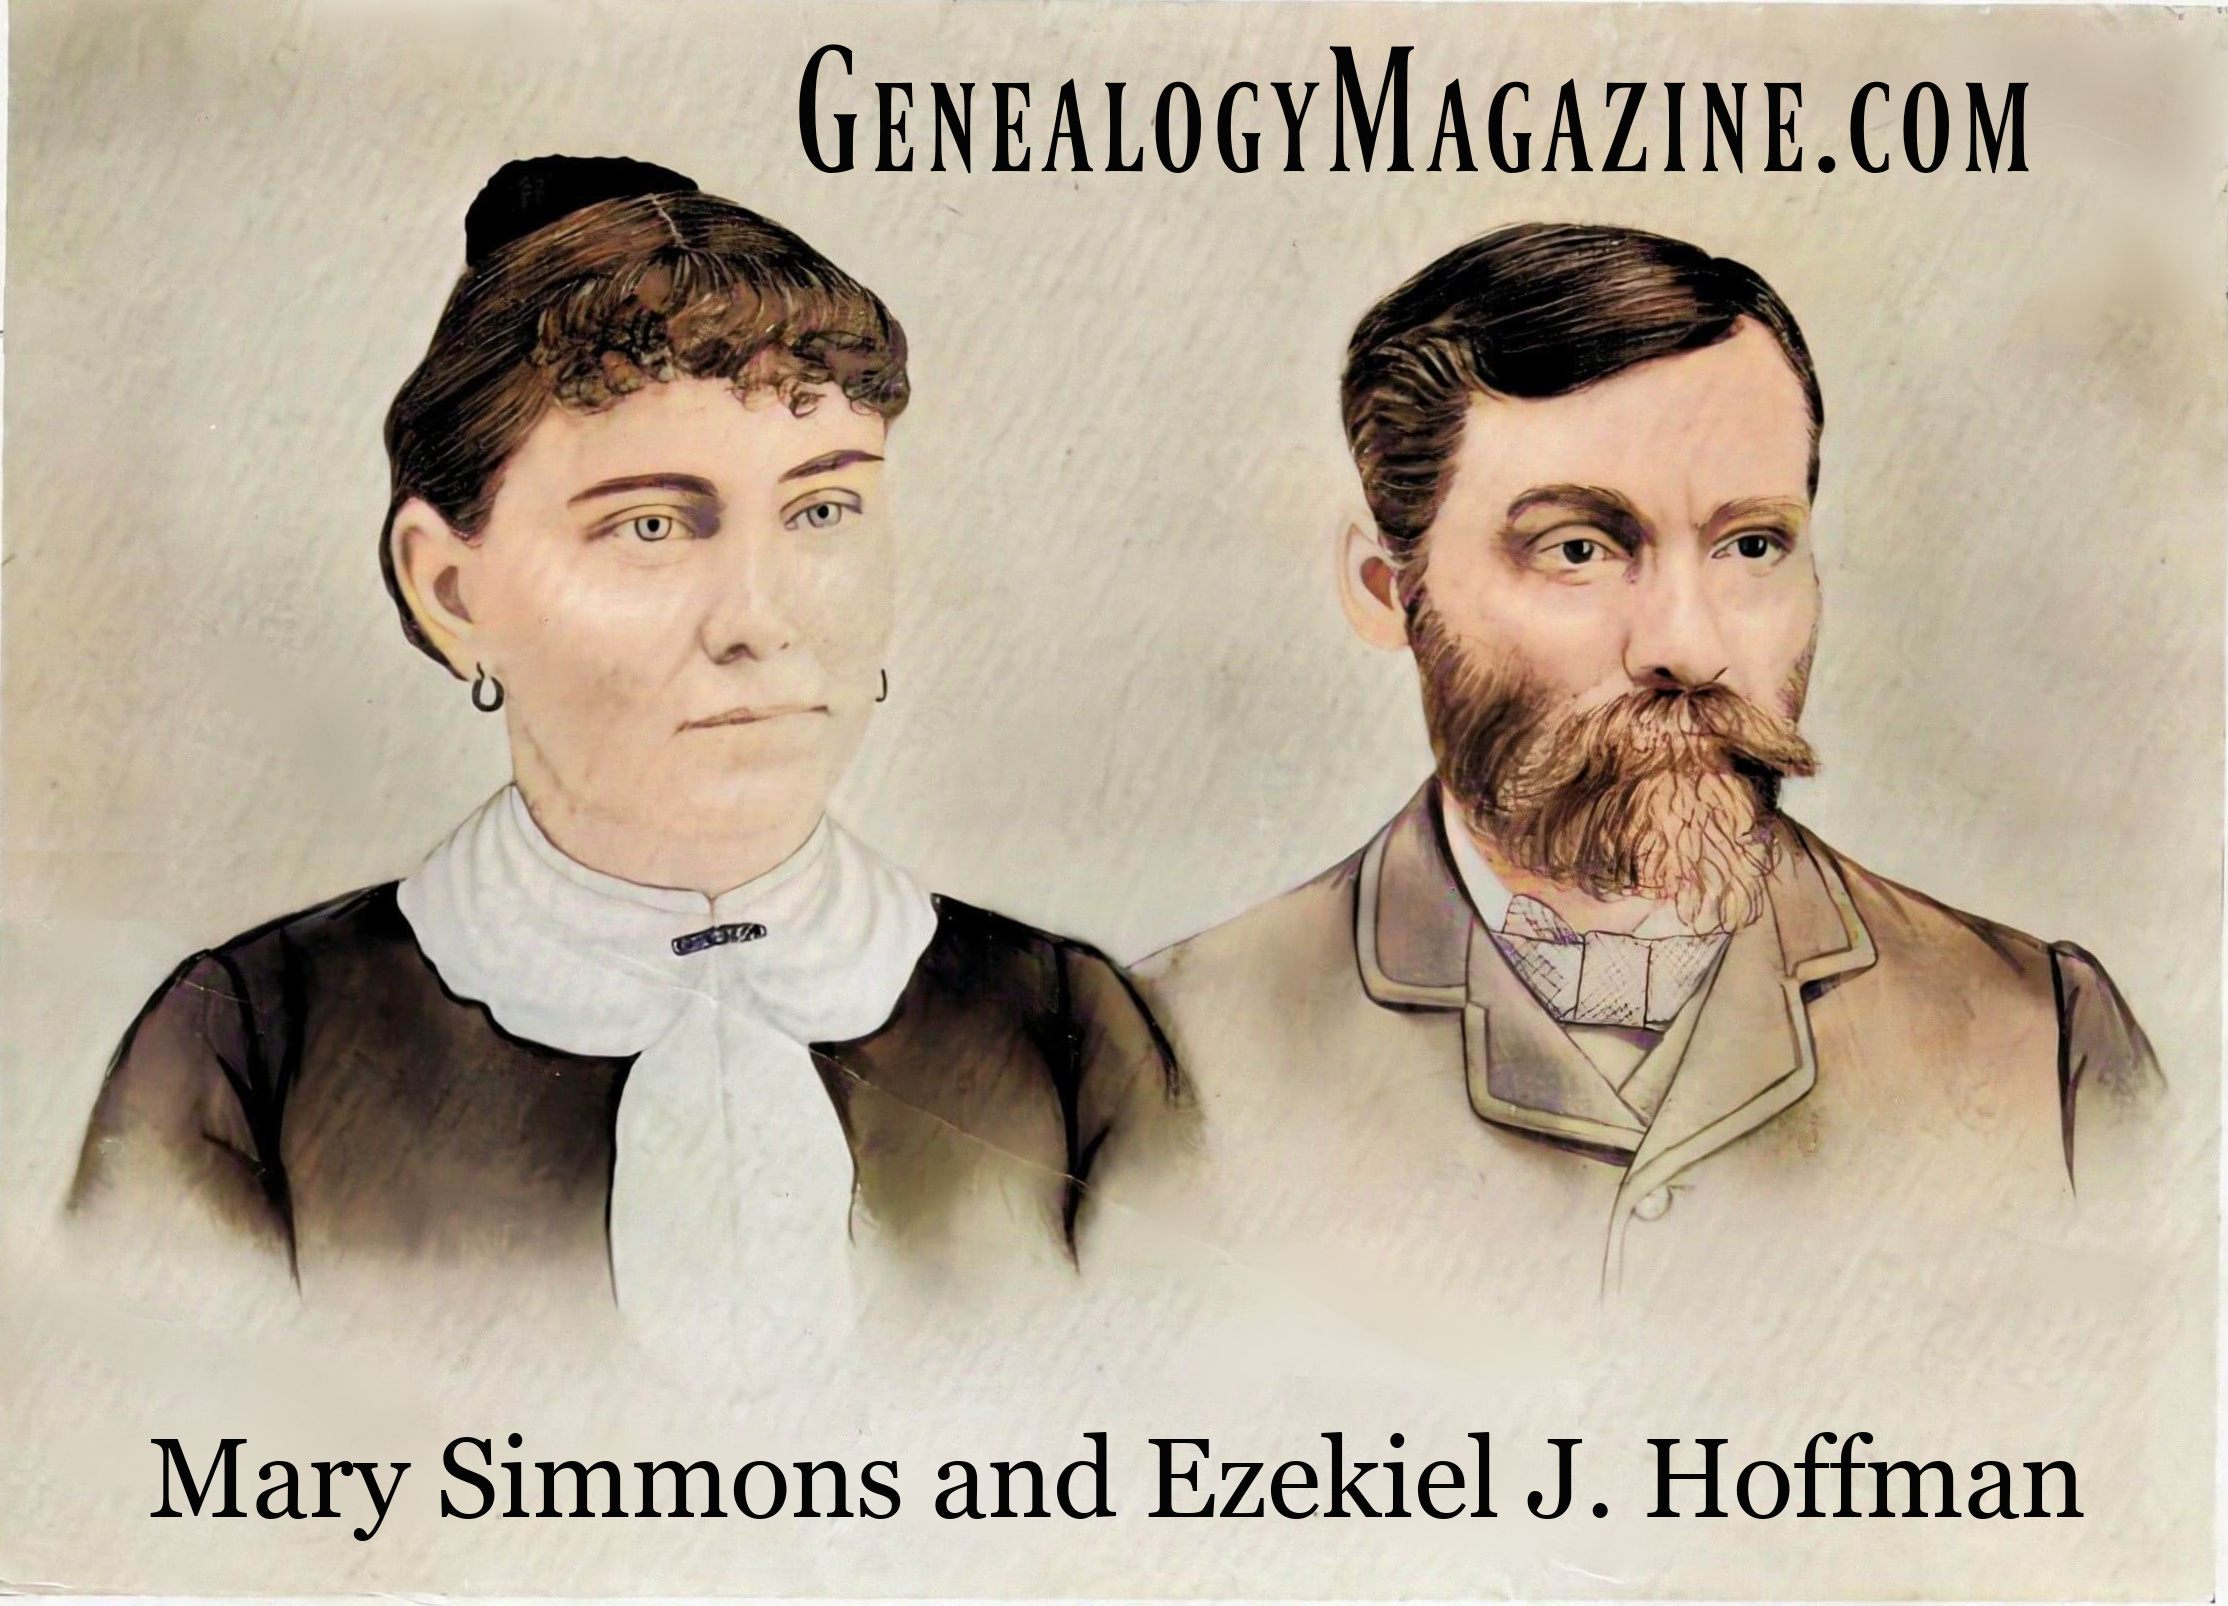 Ezekiel J. Hoffman and Mary Simmons